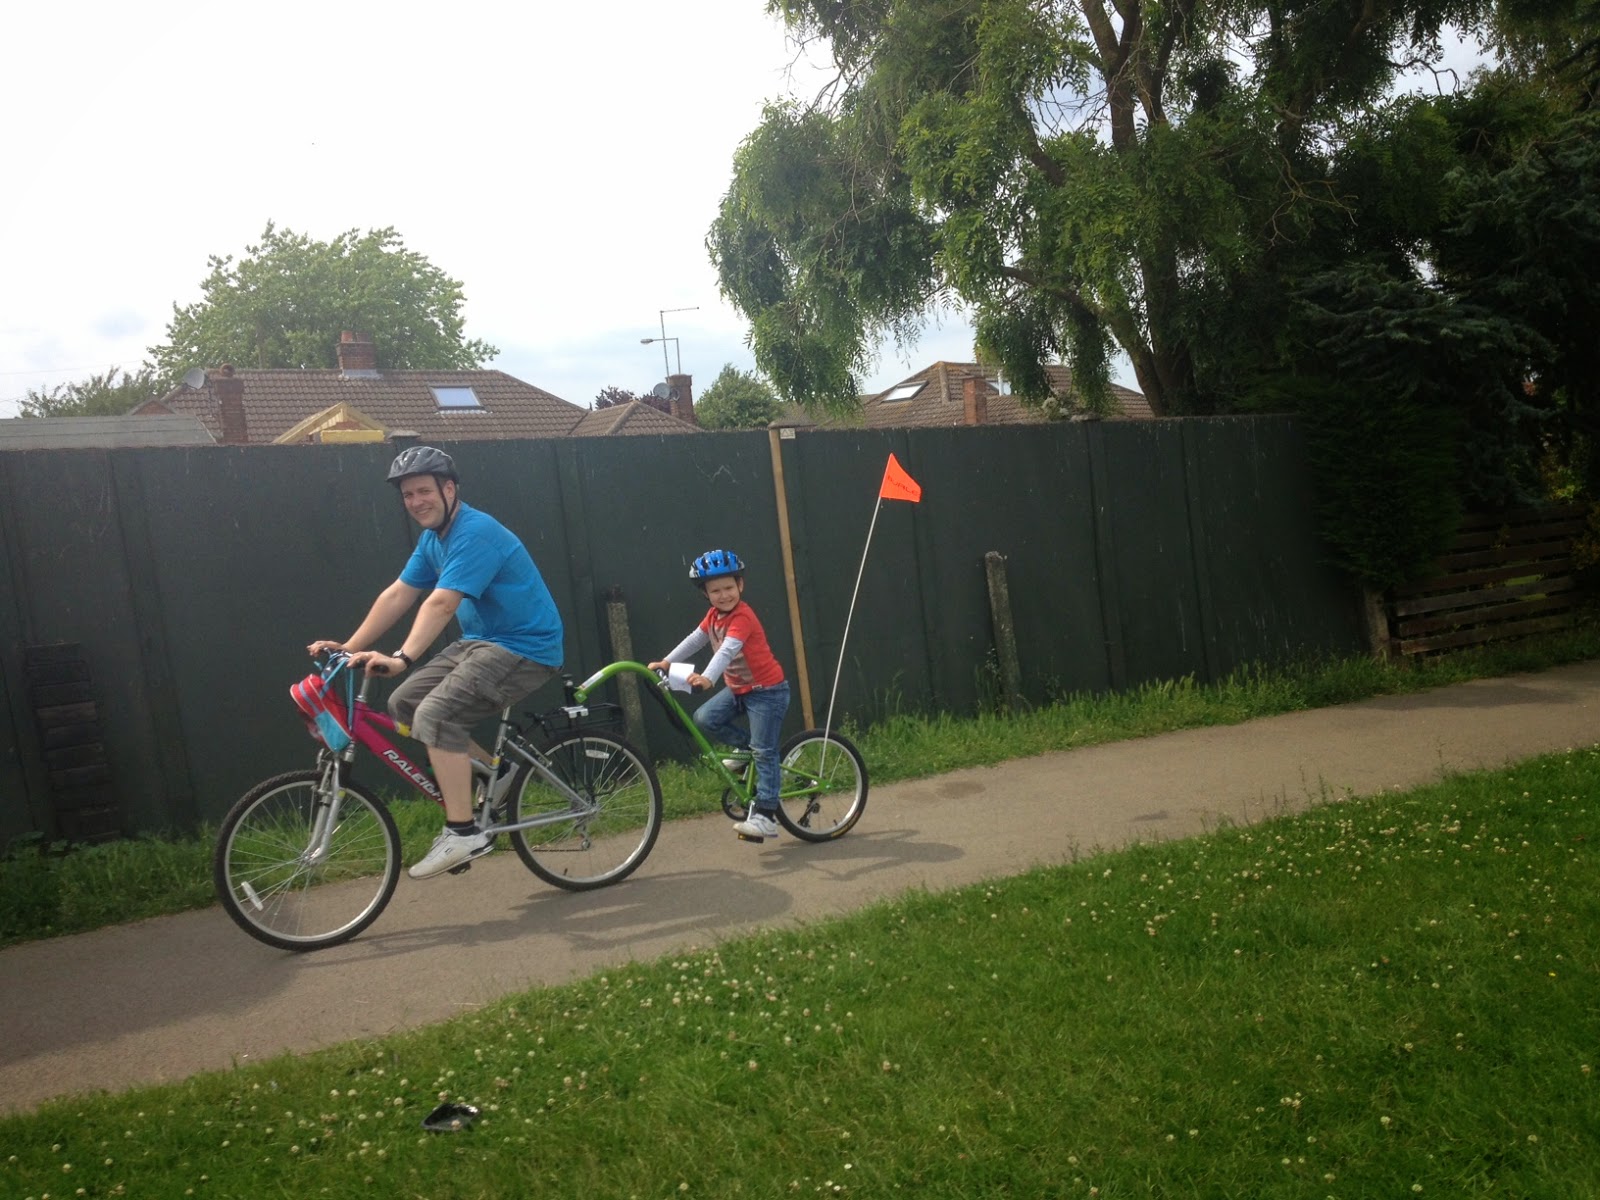 Daddy and Big Boy on the bike